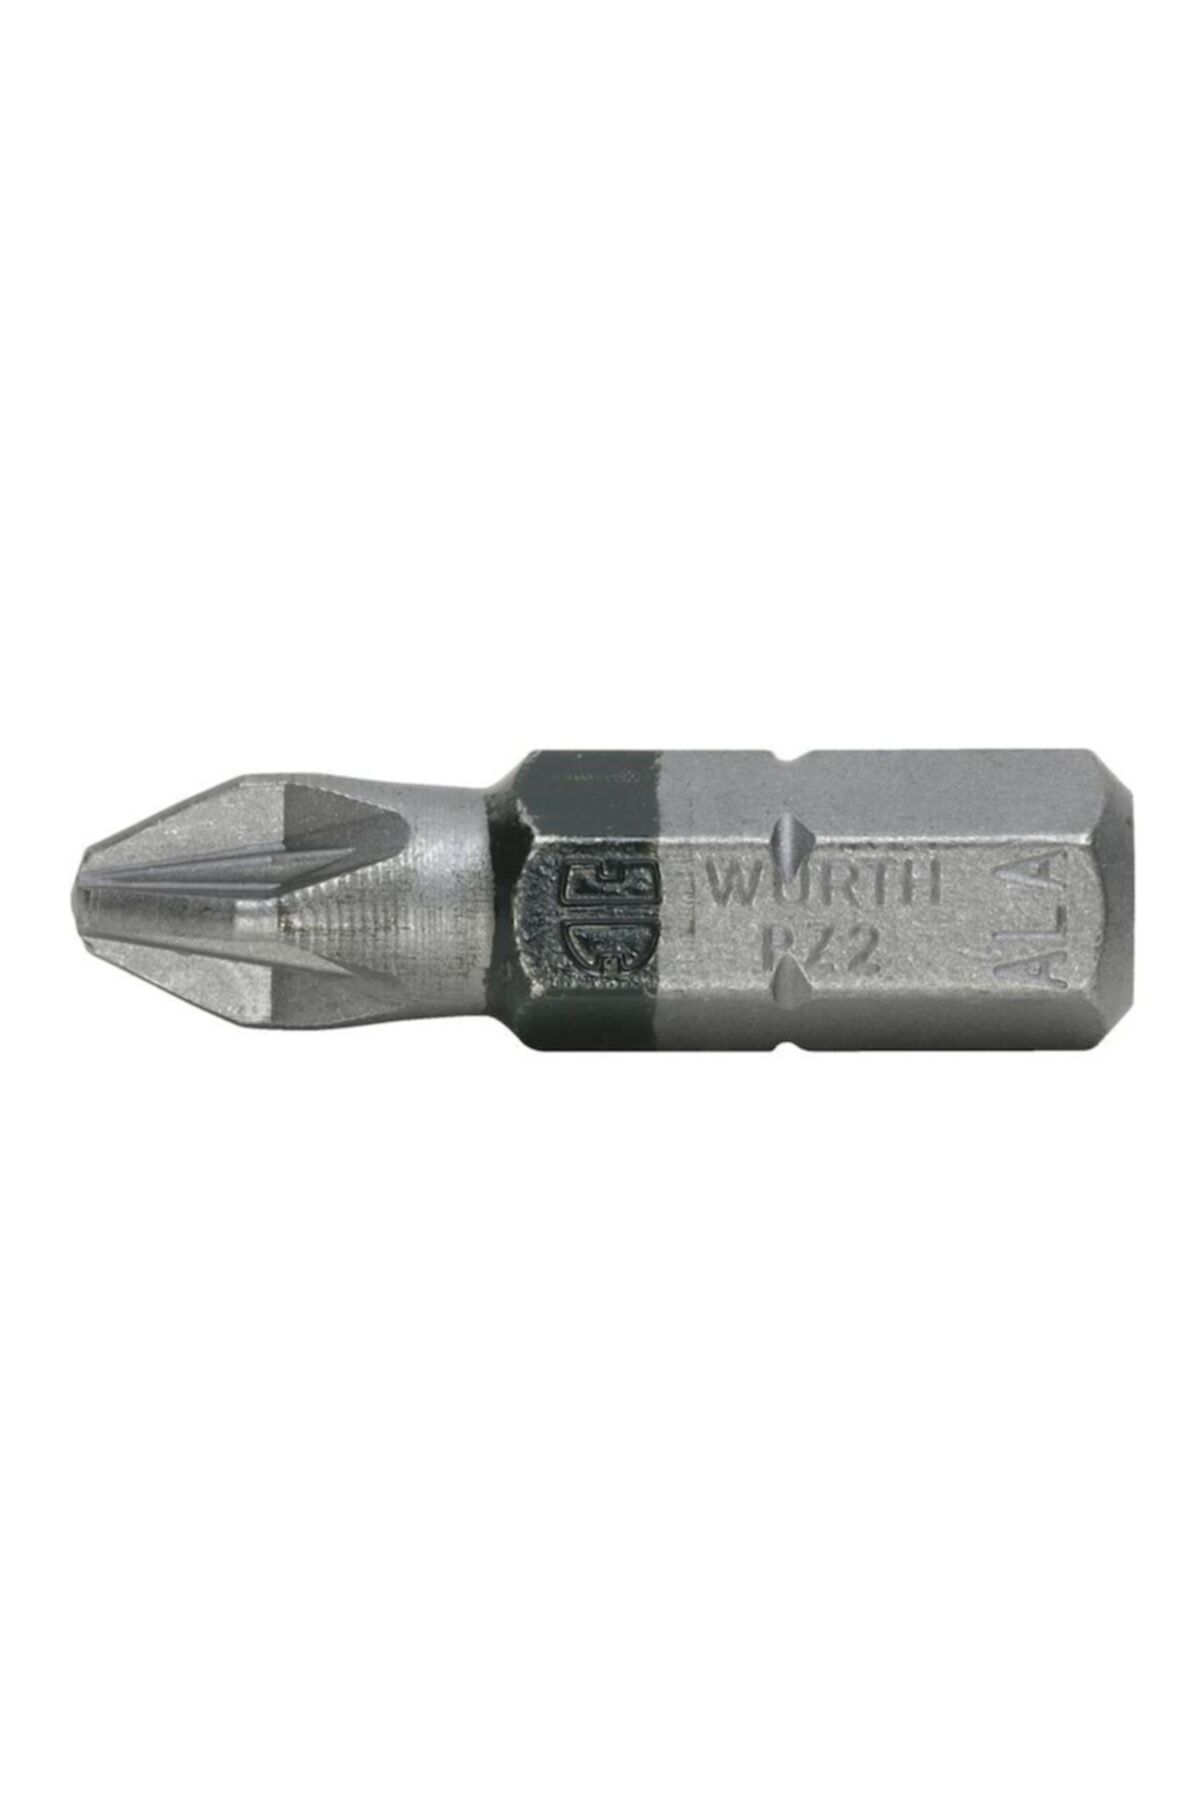 Würth Bits Uç-pz2-1/4ı-25mm